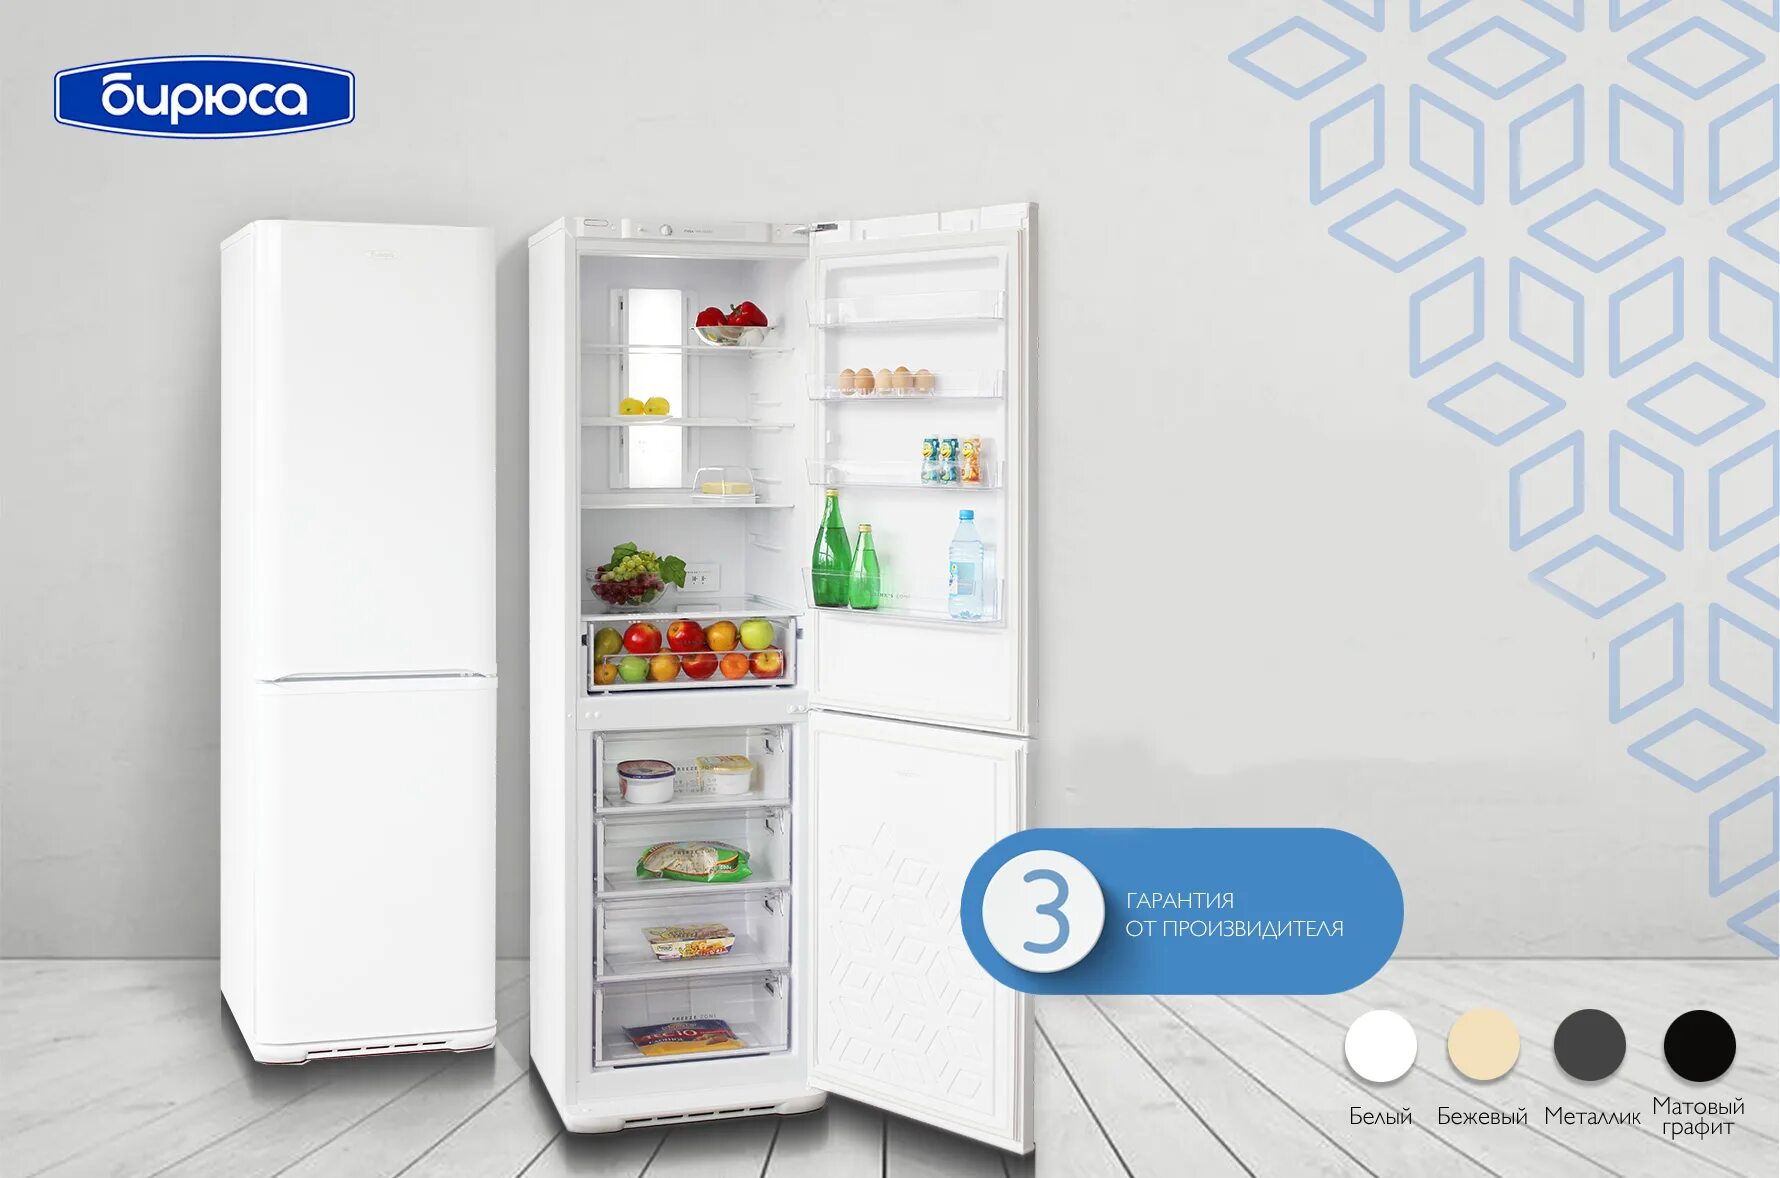 Pozis 340. Холодильник Бирюса no Frost двухкамерный. Холодильник Бирюса 1.5 метра двухкамерный. Холодильник Бирюса двухкамерный с системой ноу Фрост. Холодильник Бирюса m 380nf.